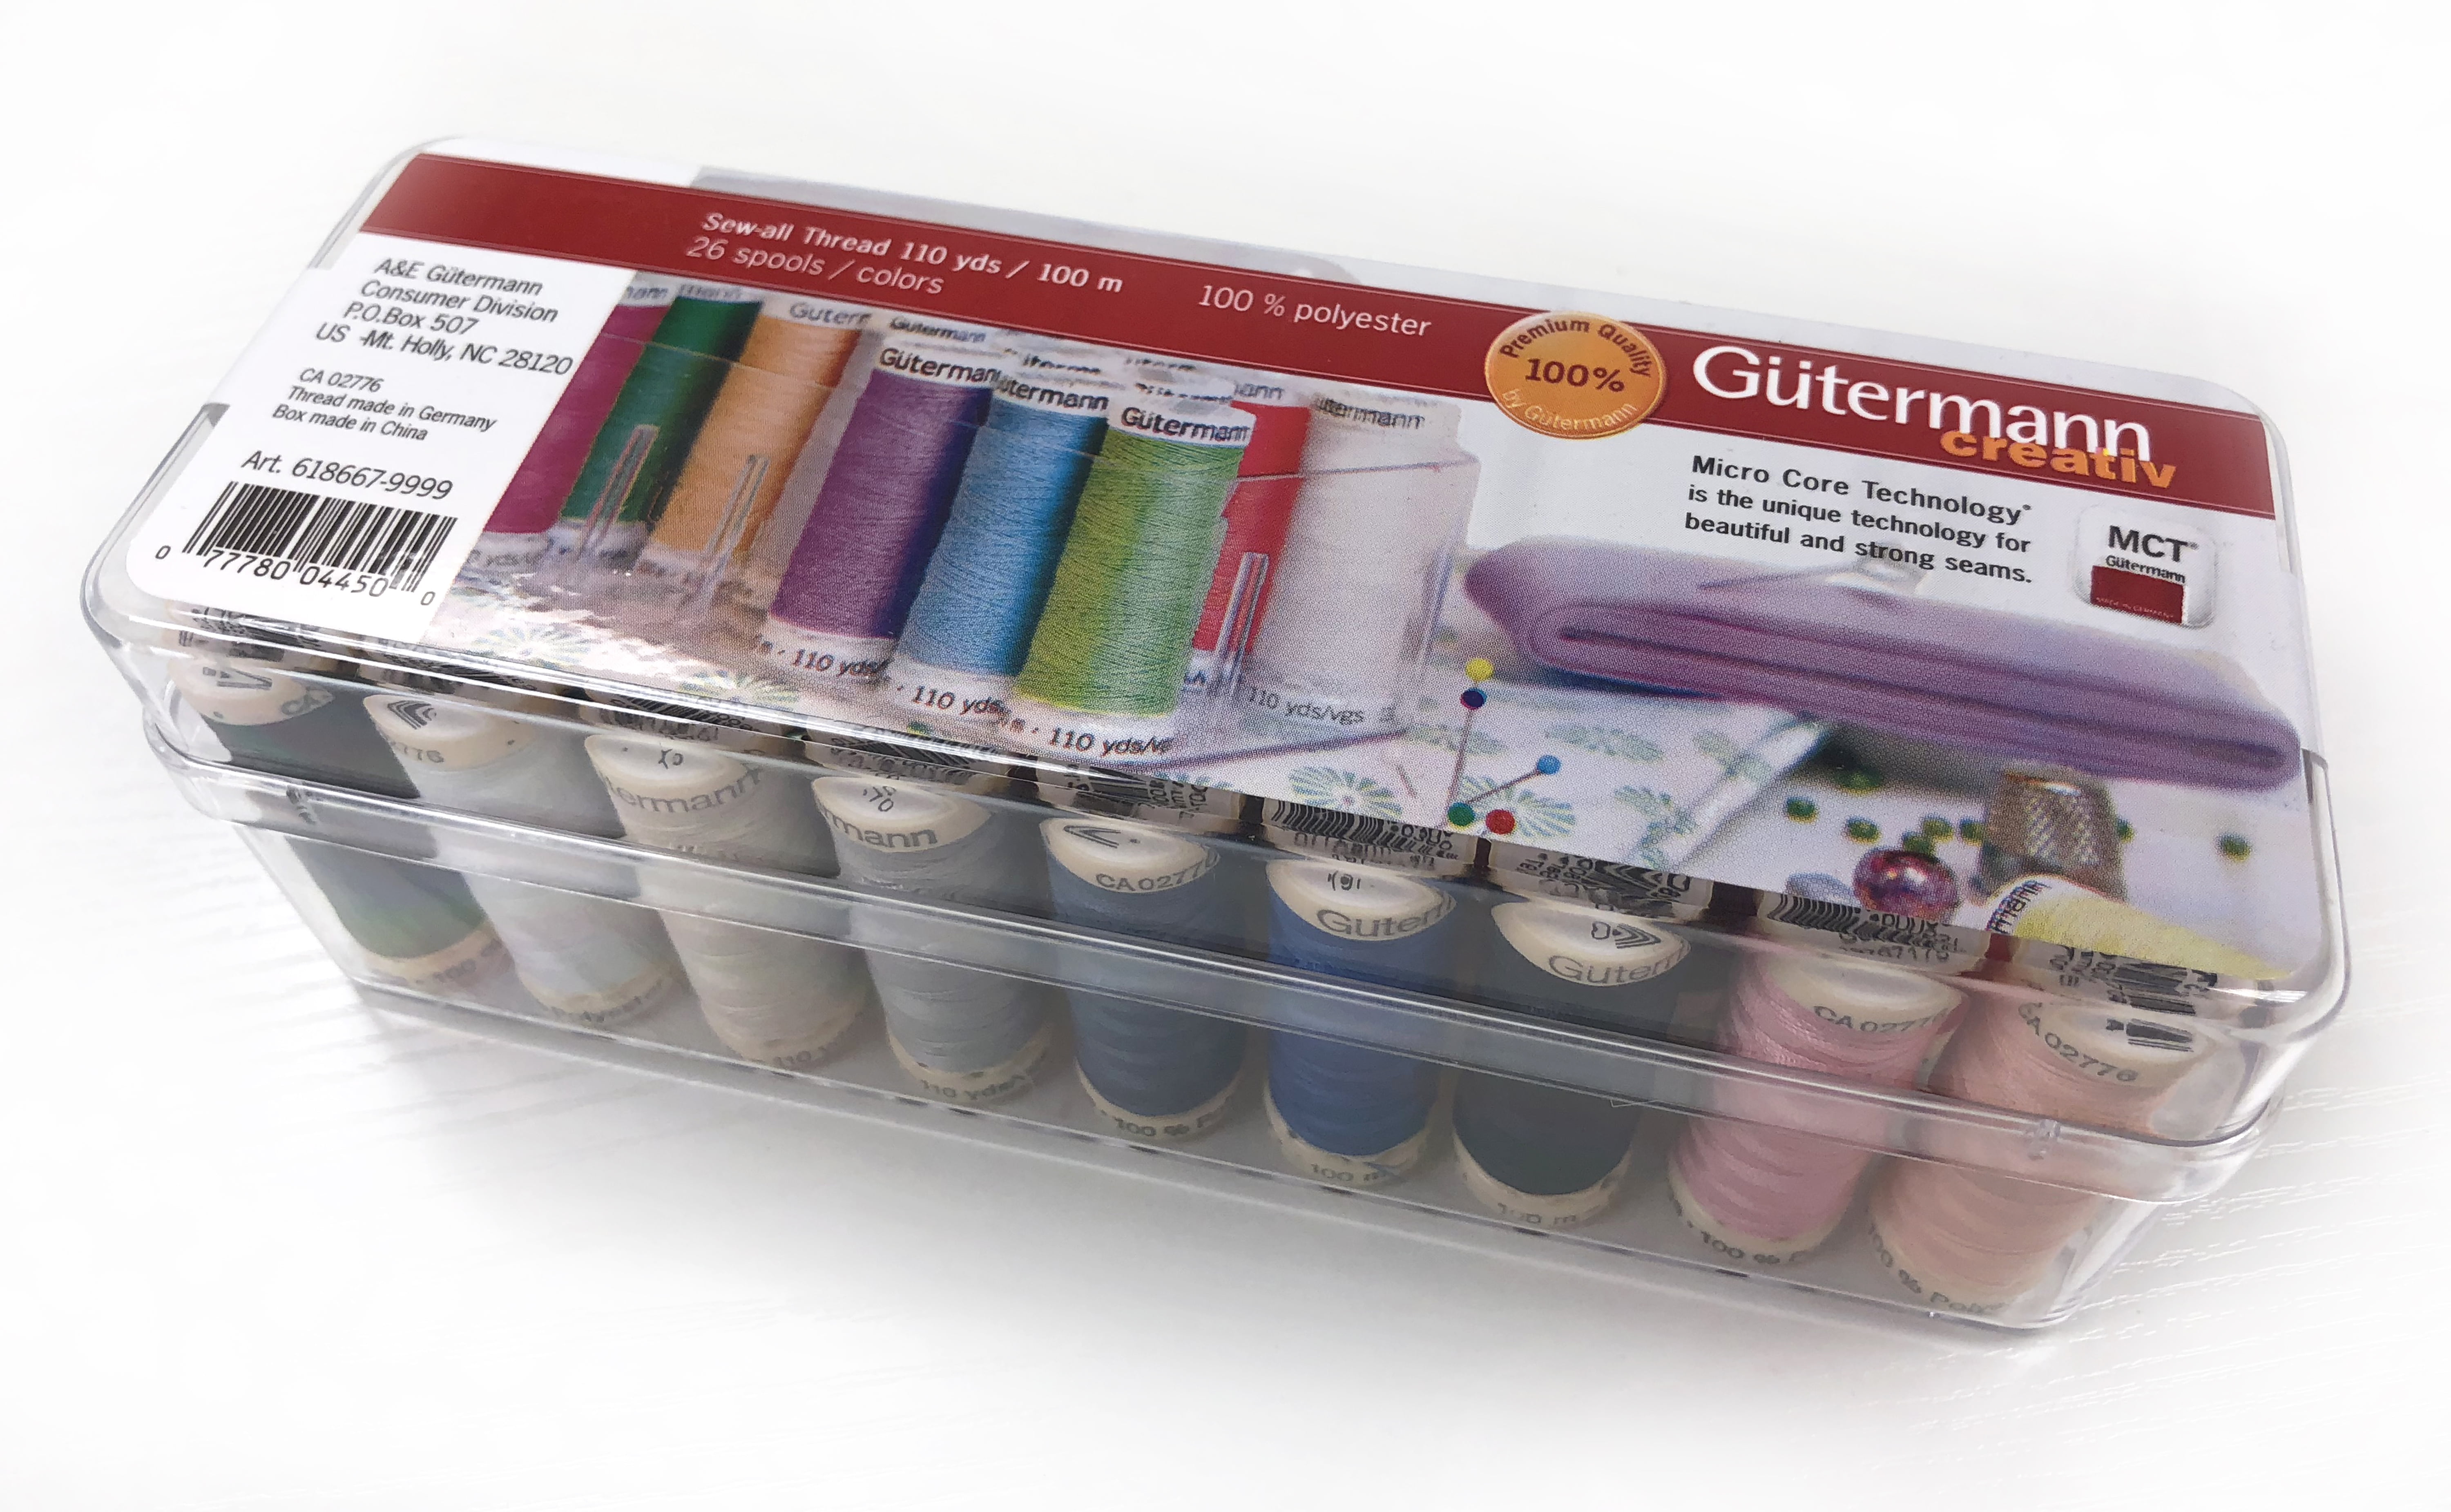 Gutermann Cotton Thread Collection Box - 26 Spools